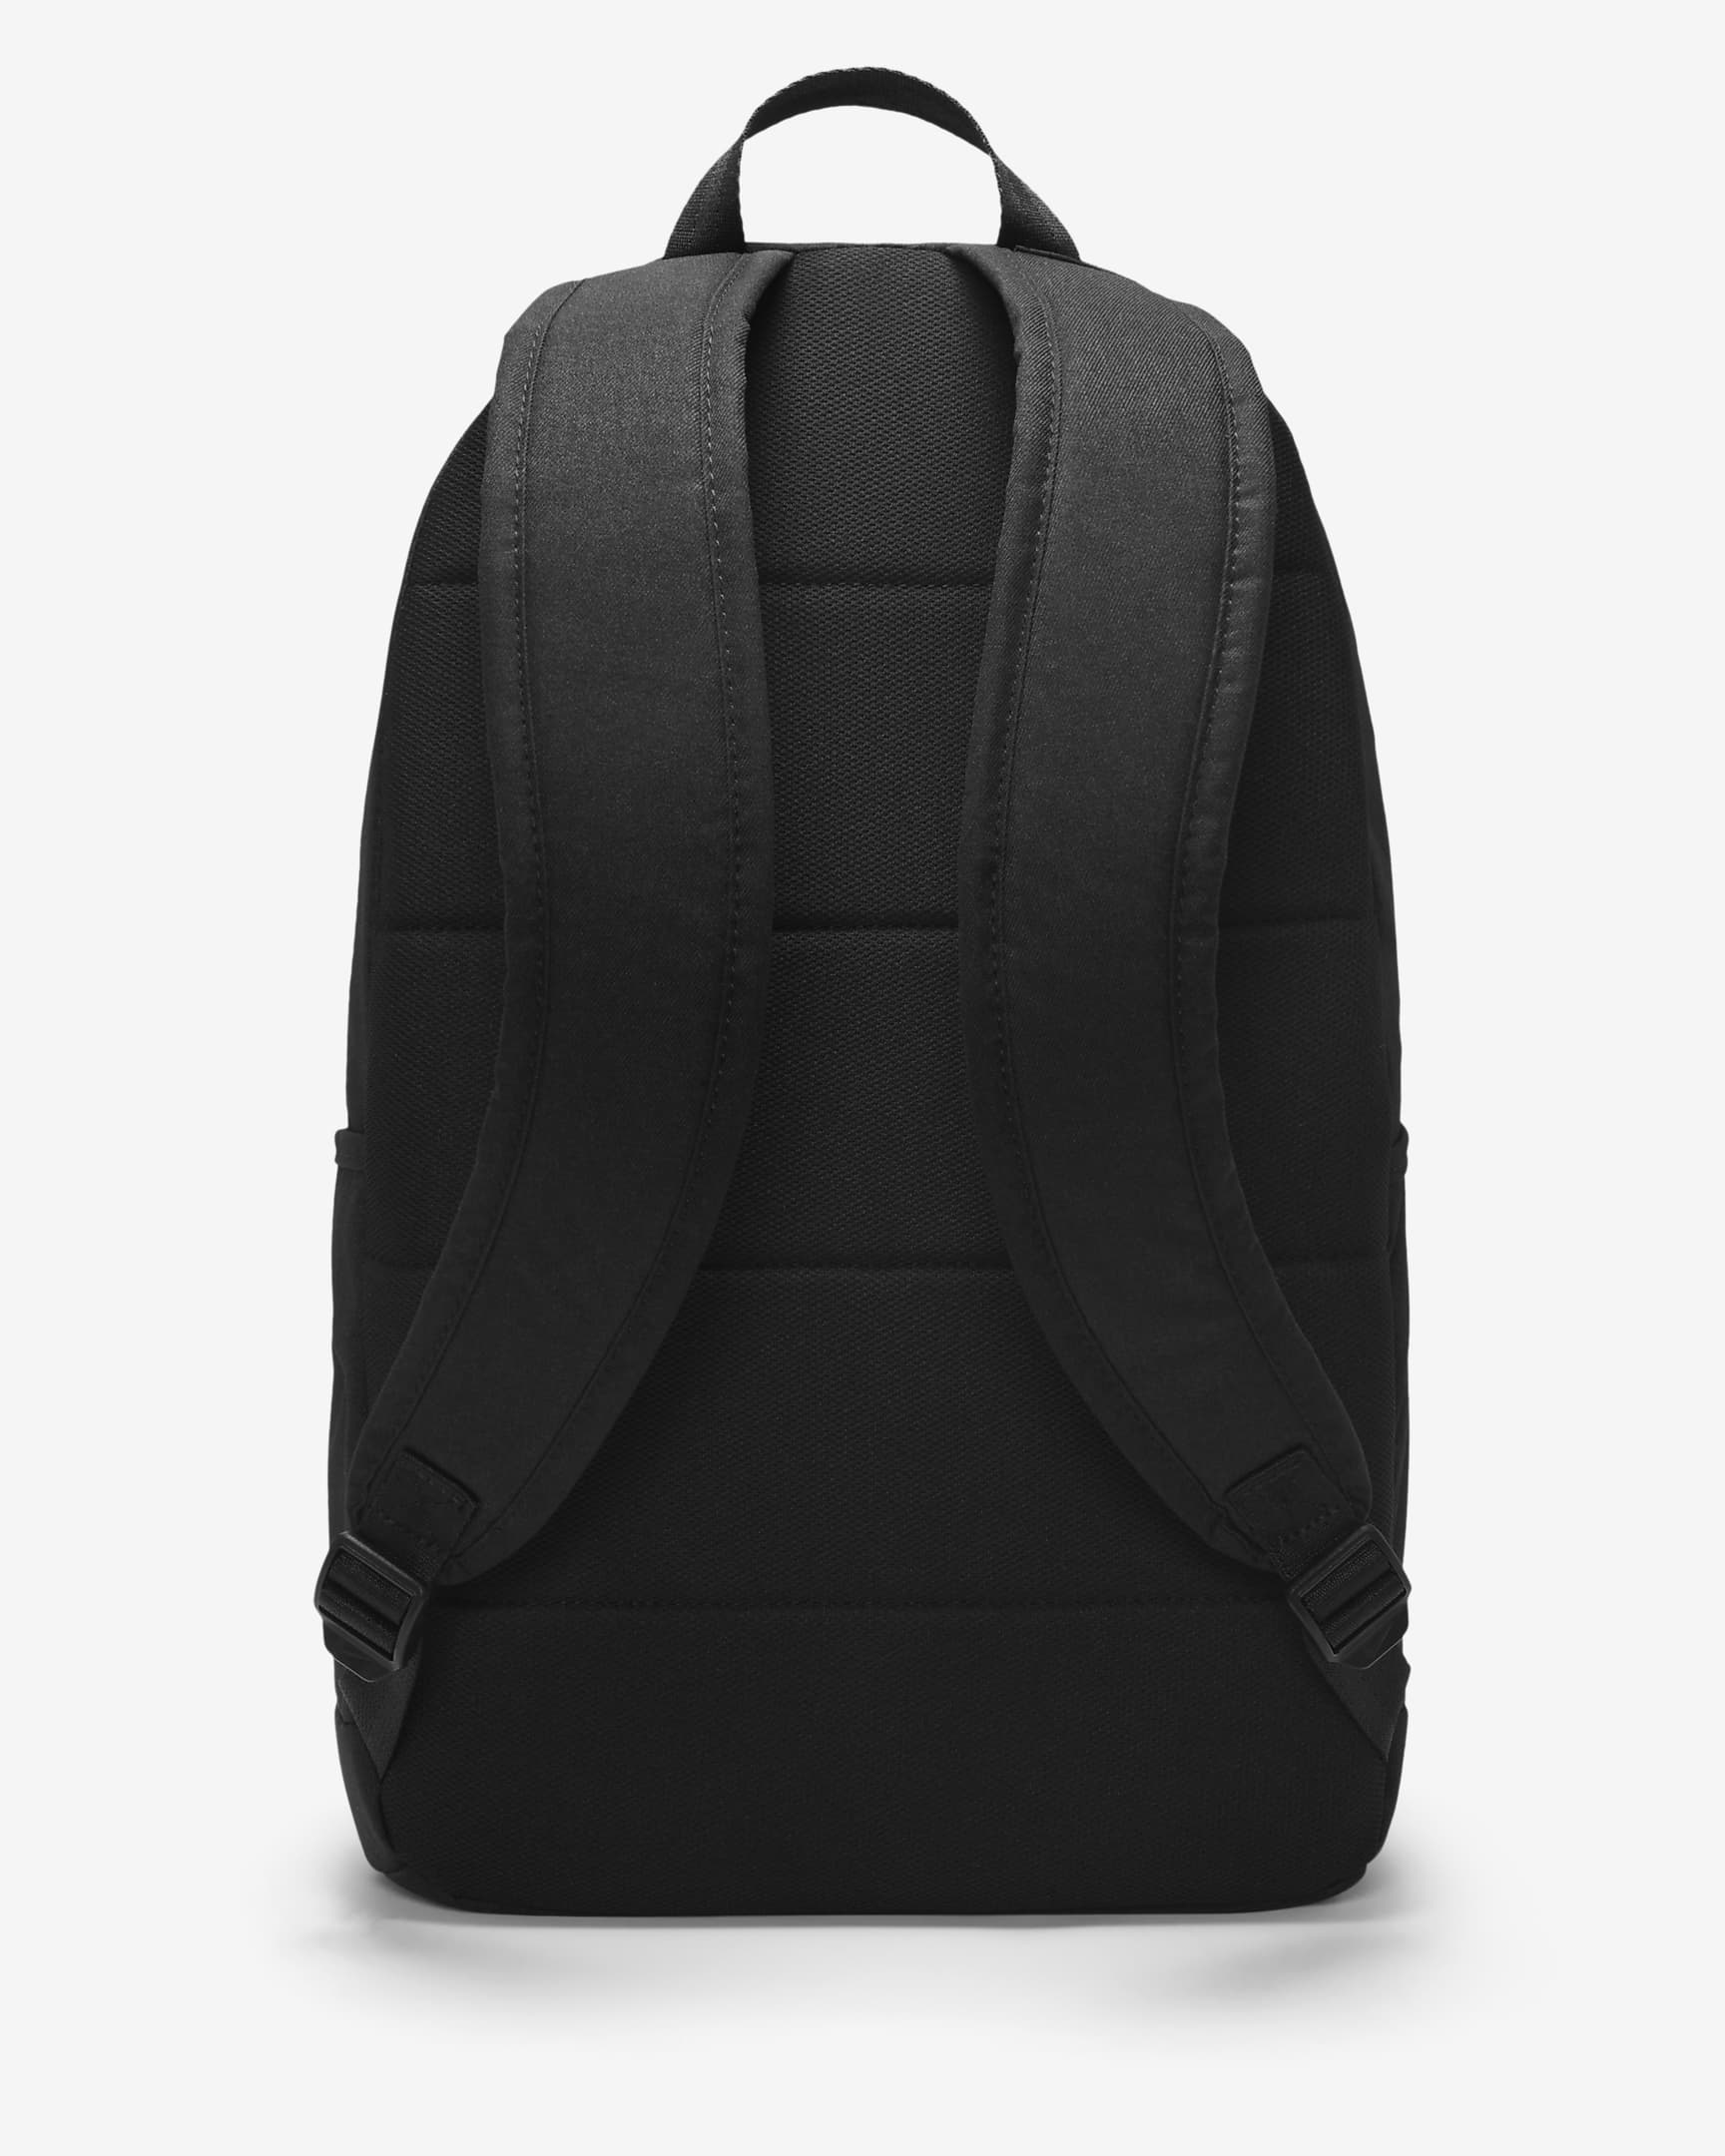 Nike Premium Backpack (21L) - Black/Black/Anthracite